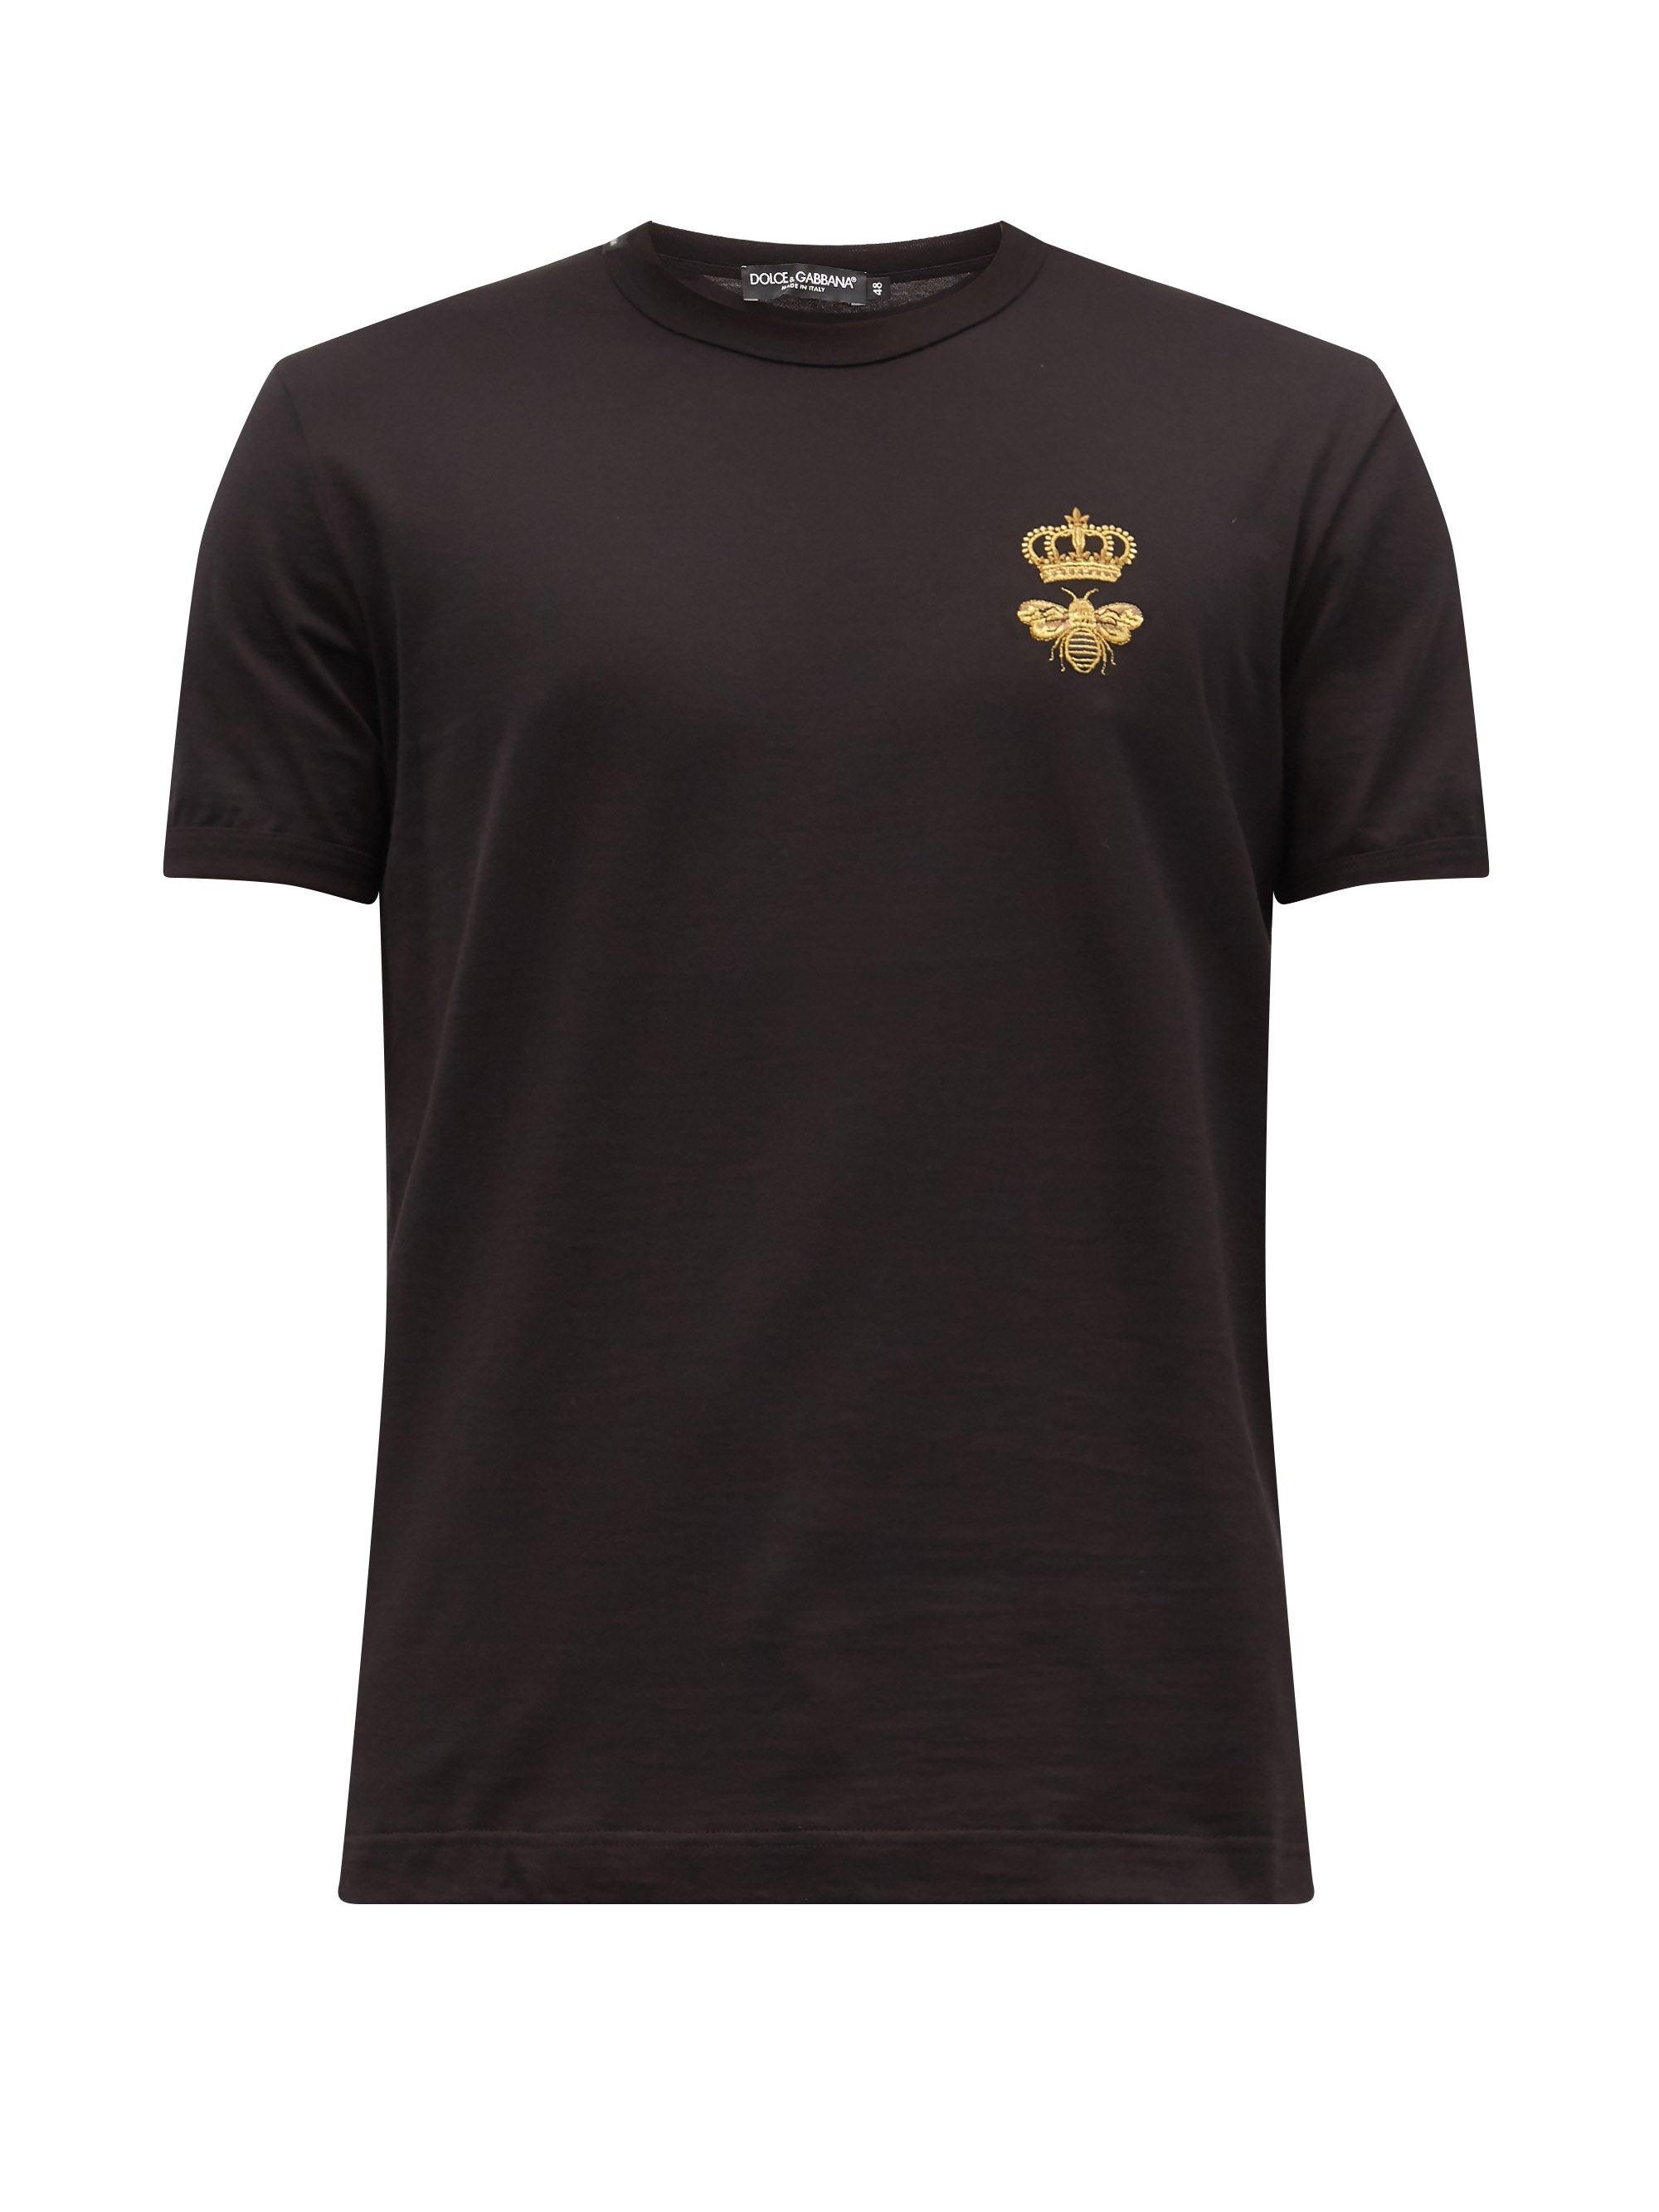 Dolce & Gabbana Crown-logo Cotton-jersey T-shirt in Black for Men - Lyst